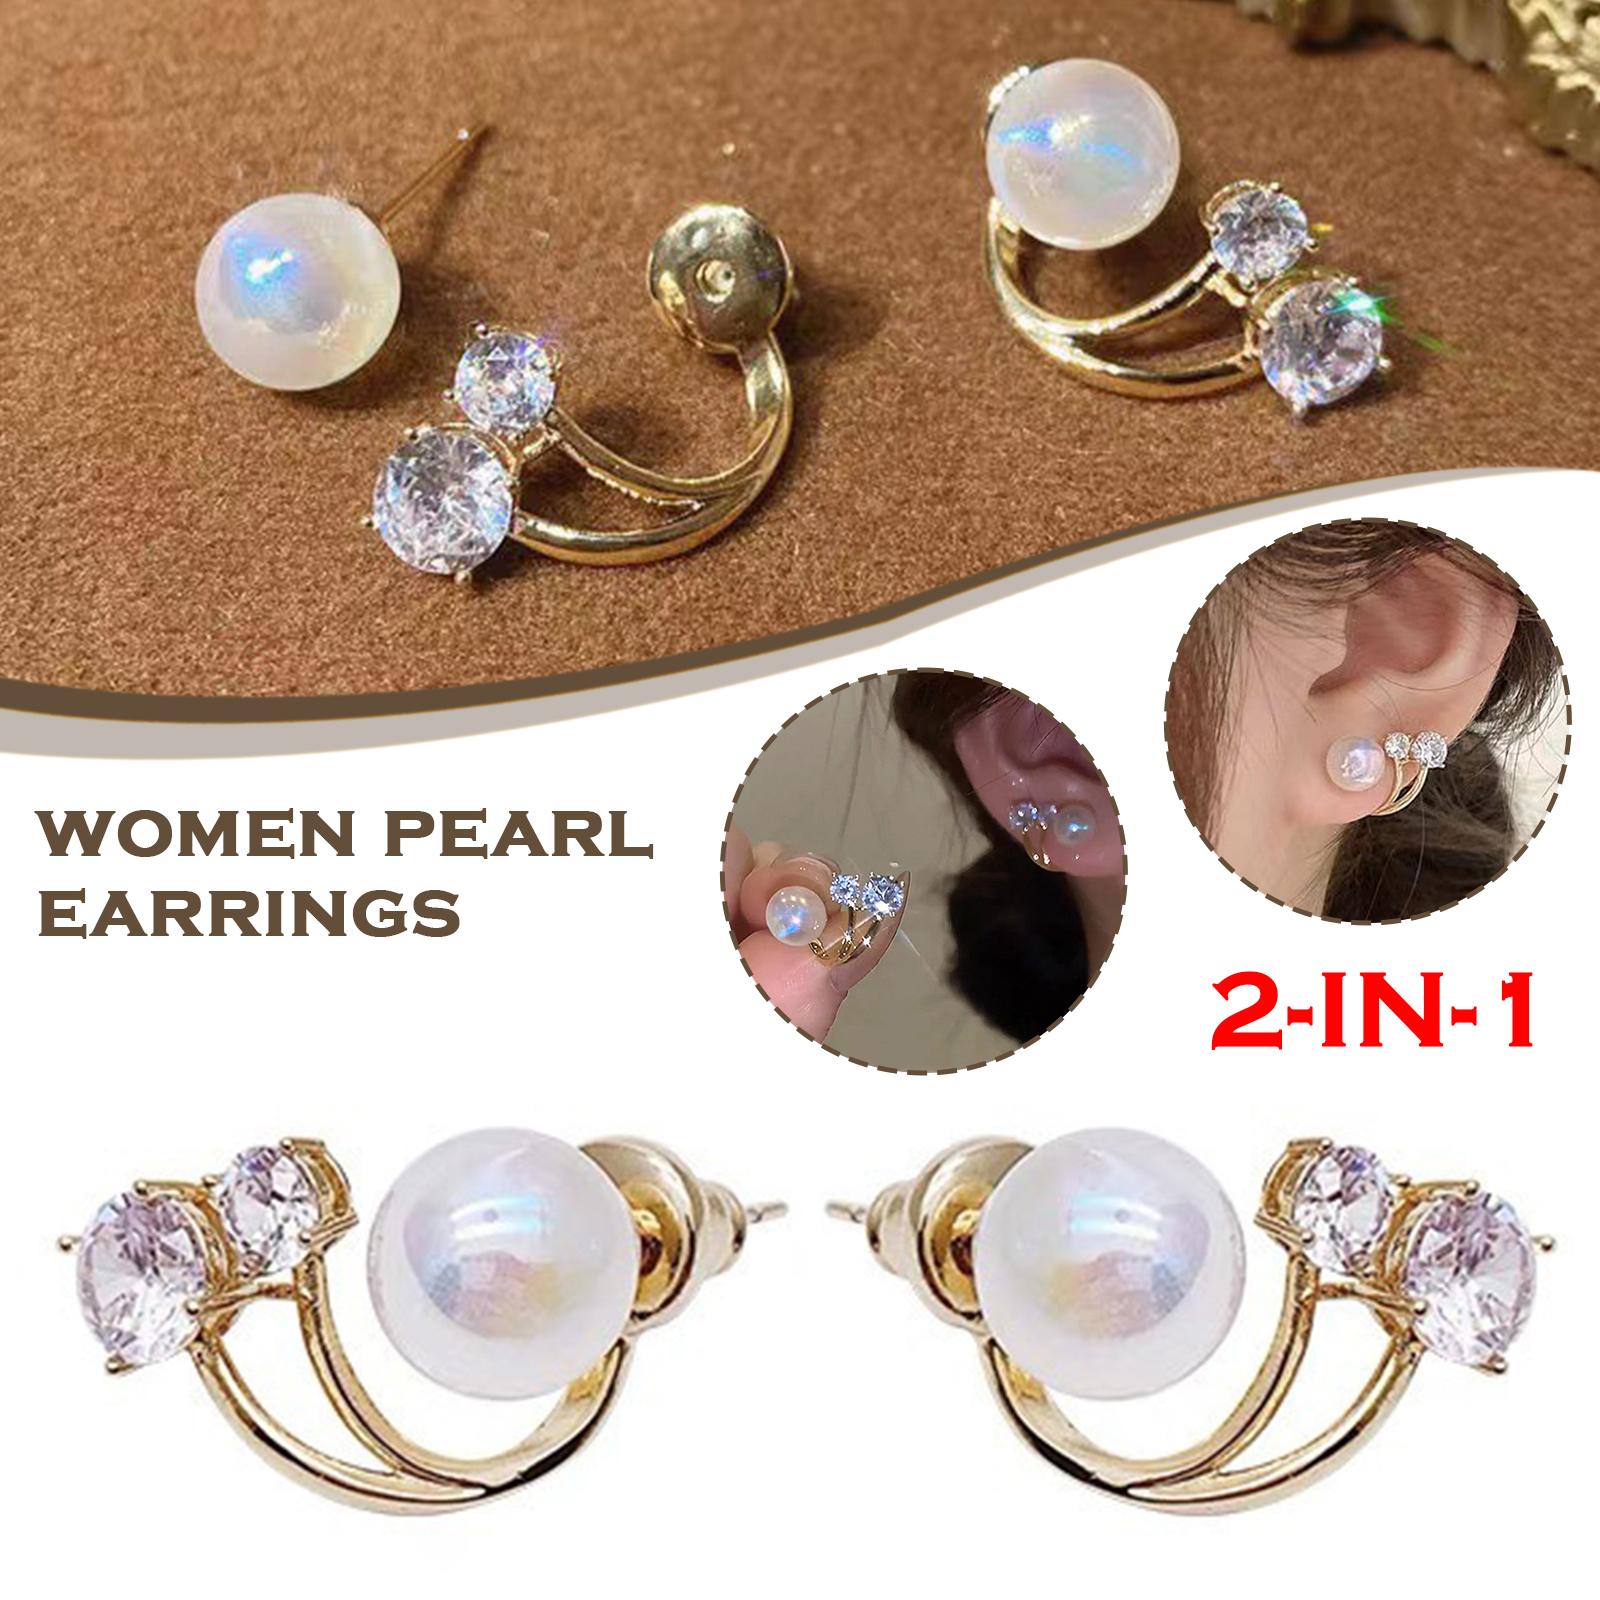 Fashion Rhinestone Crystal Pearl Ear Stud Earrings Jewelry Gift Women G3C9 - image 3 of 9